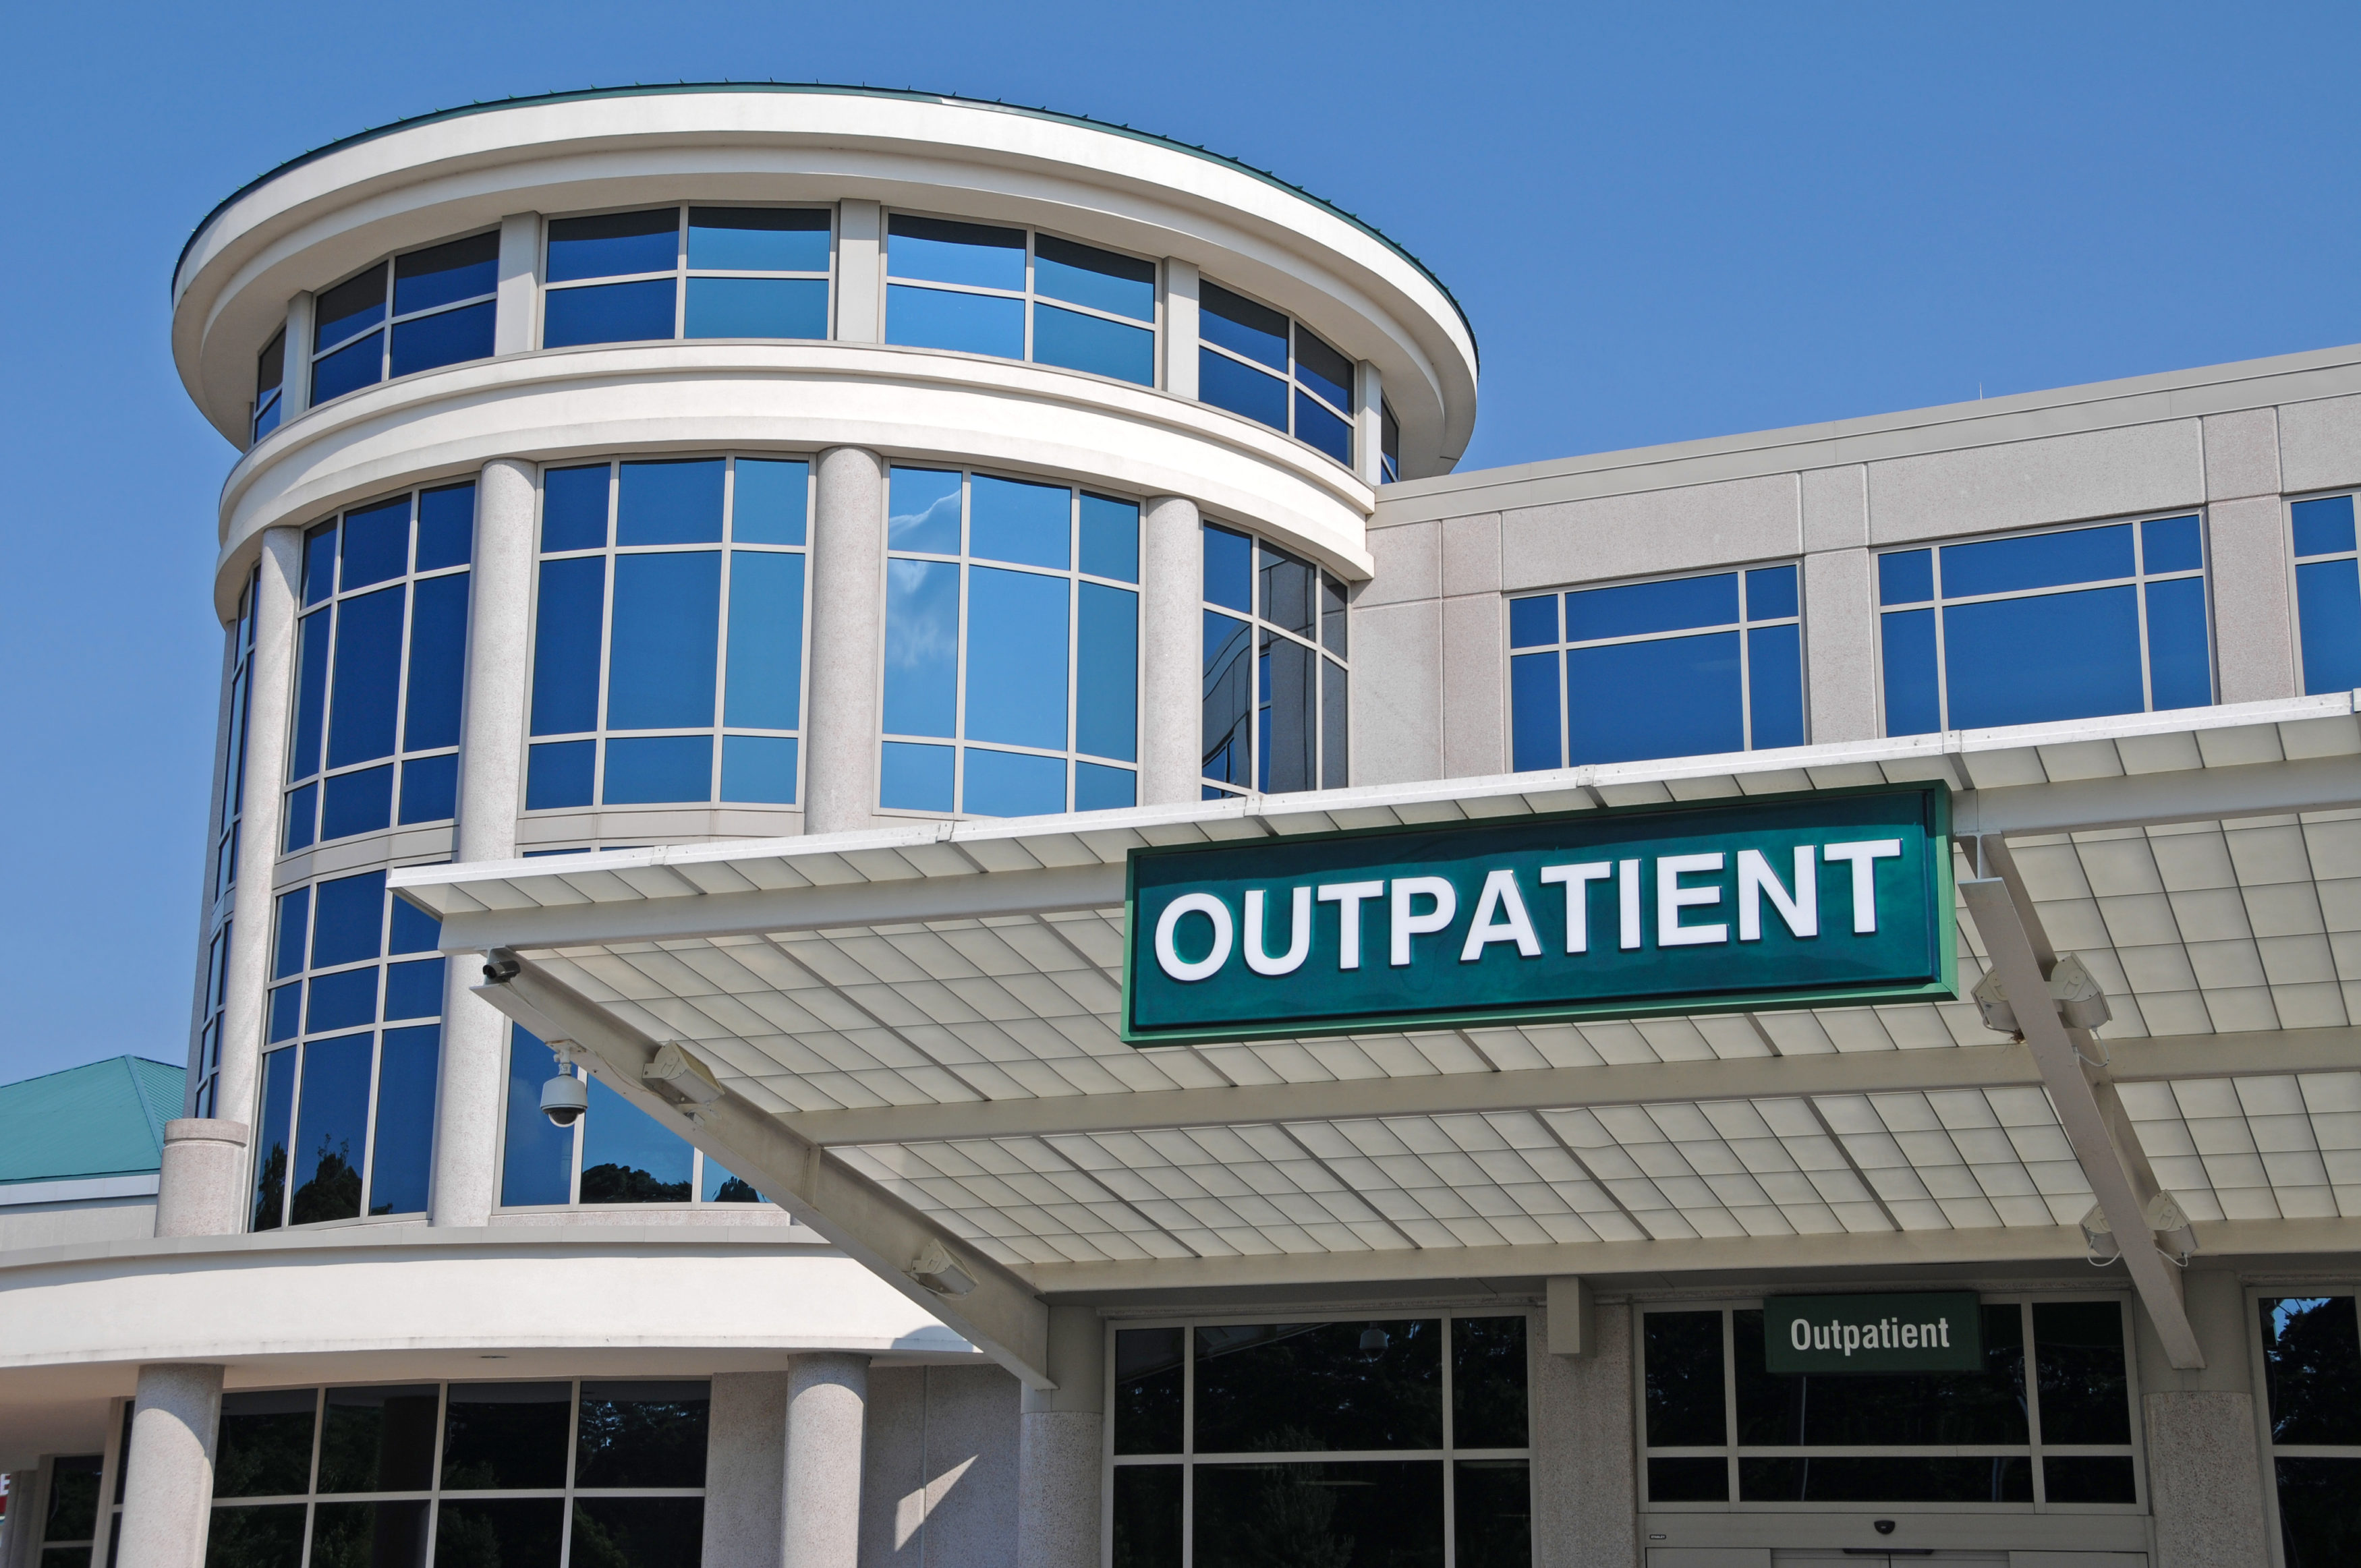 outpatient-surgery-center-3500x2325.jpg